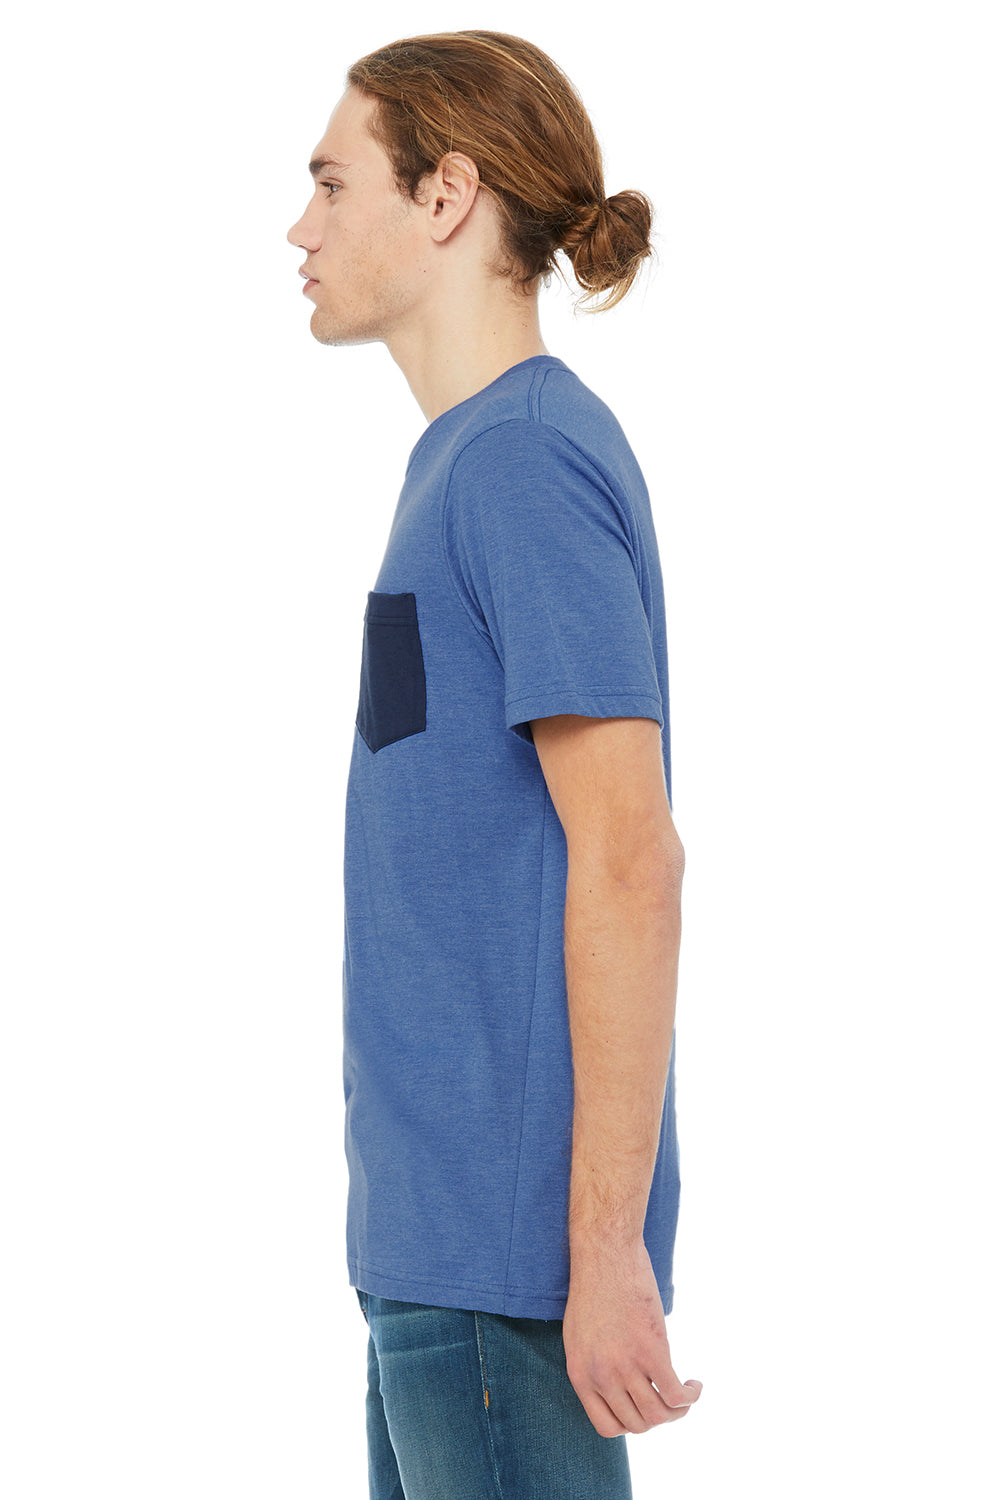 Bella + Canvas 3021 Mens Jersey Short Sleeve Crewneck T-Shirt w/ Pocket Heather Royal Blue/Navy Blue Side